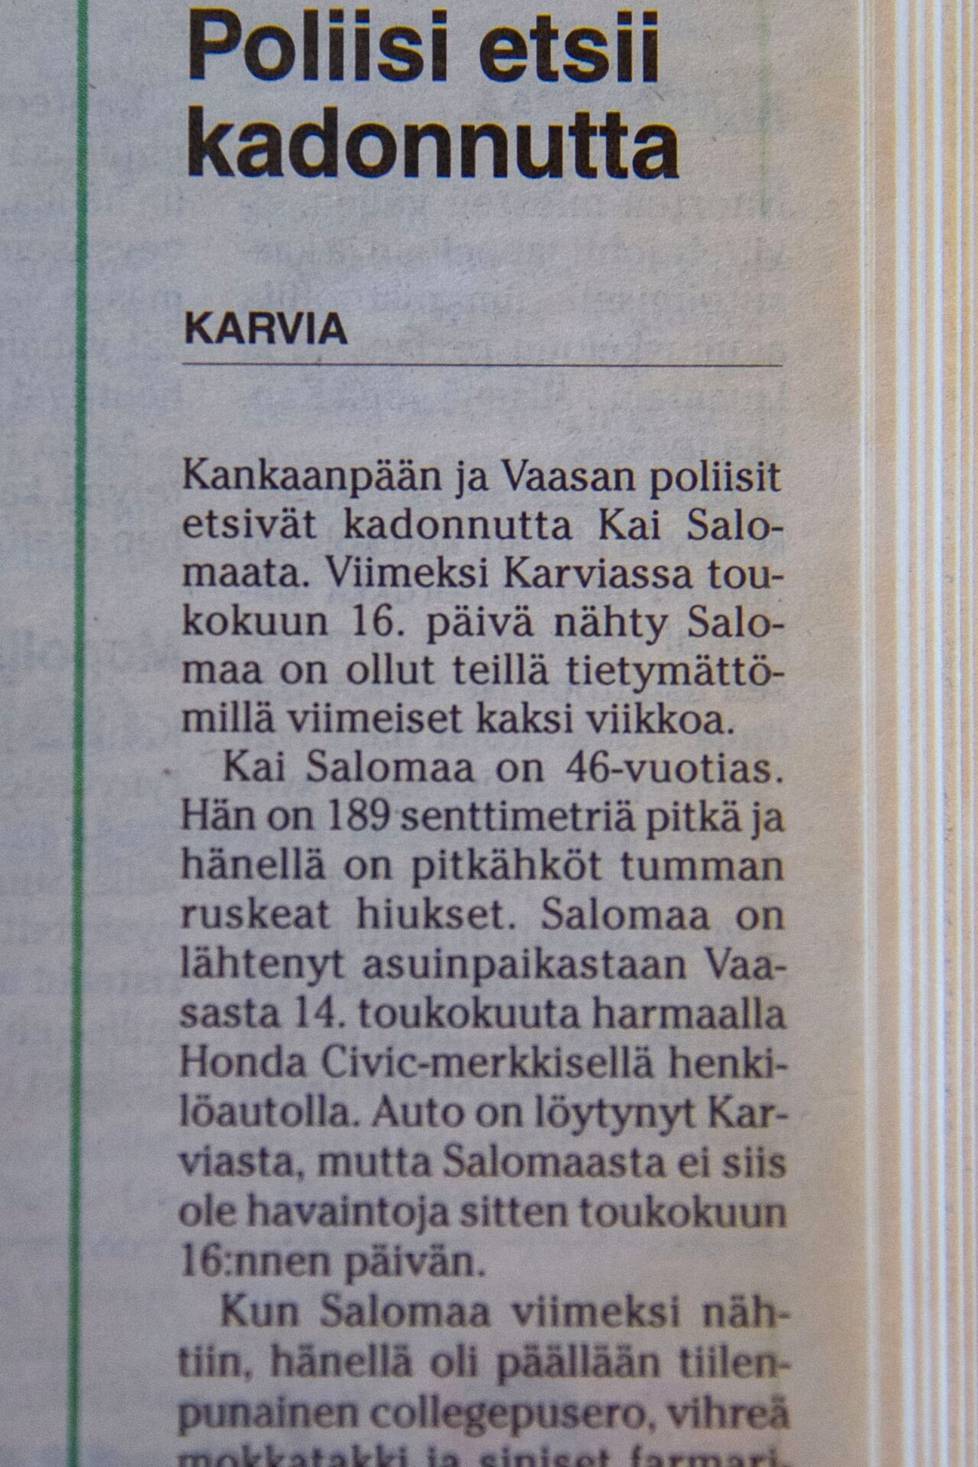 On June 2, 2003, the Kankaanpää region reported on Kai Salomaa's disappearance with a small story.